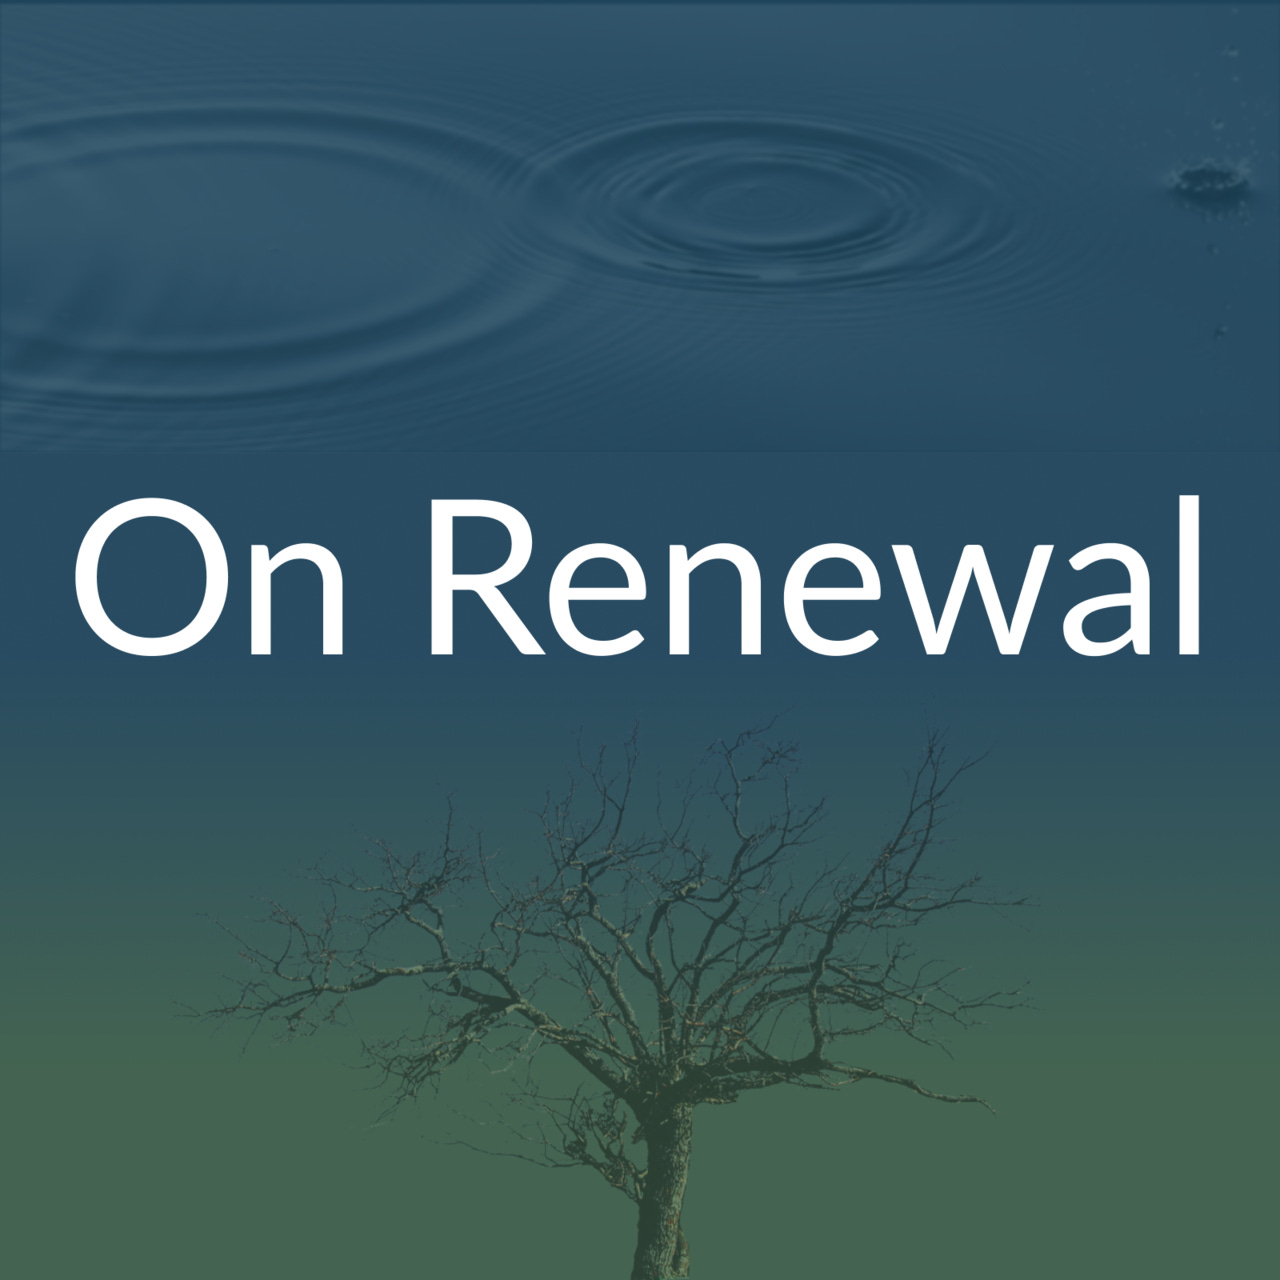 On Renewal